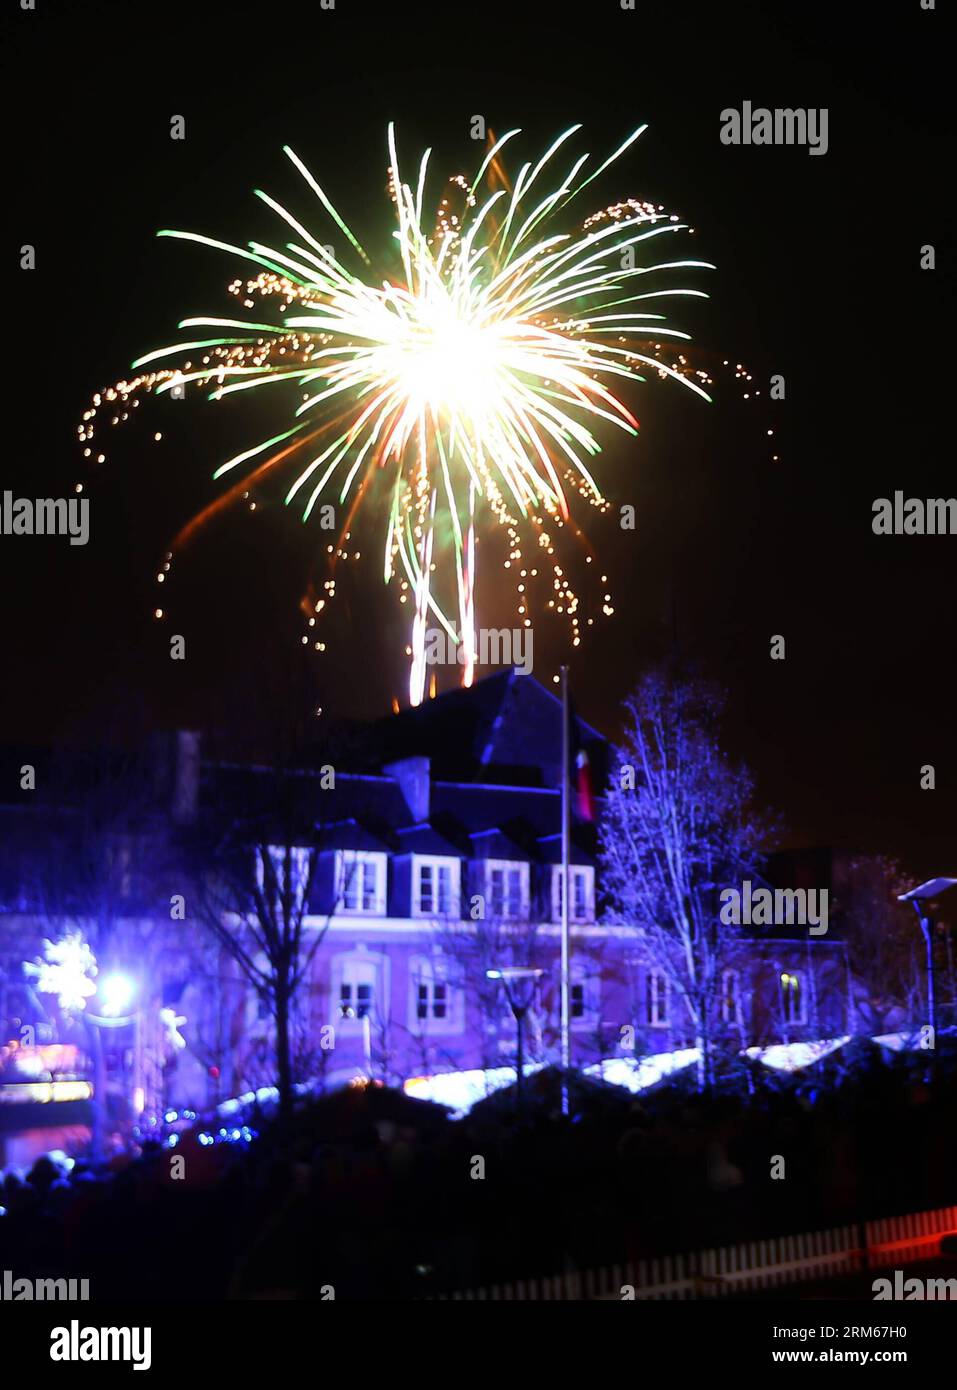 Bildnummer: 60834263  Datum: 16.12.2013  Copyright: imago/Xinhua     (131216) -- HAUTMONT, Dec. 16, 2013 (Xinhua) -- Fireworks are seen at the Christmas market in the city of Hautmont, northern France, Dec. 14, 2013. (Xinhua/Gong Bing) FRANCE-HAUTMONT-CHRISTMAS PUBLICATIONxNOTxINxCHN xcb x0x 2013 hoch Stock Photo